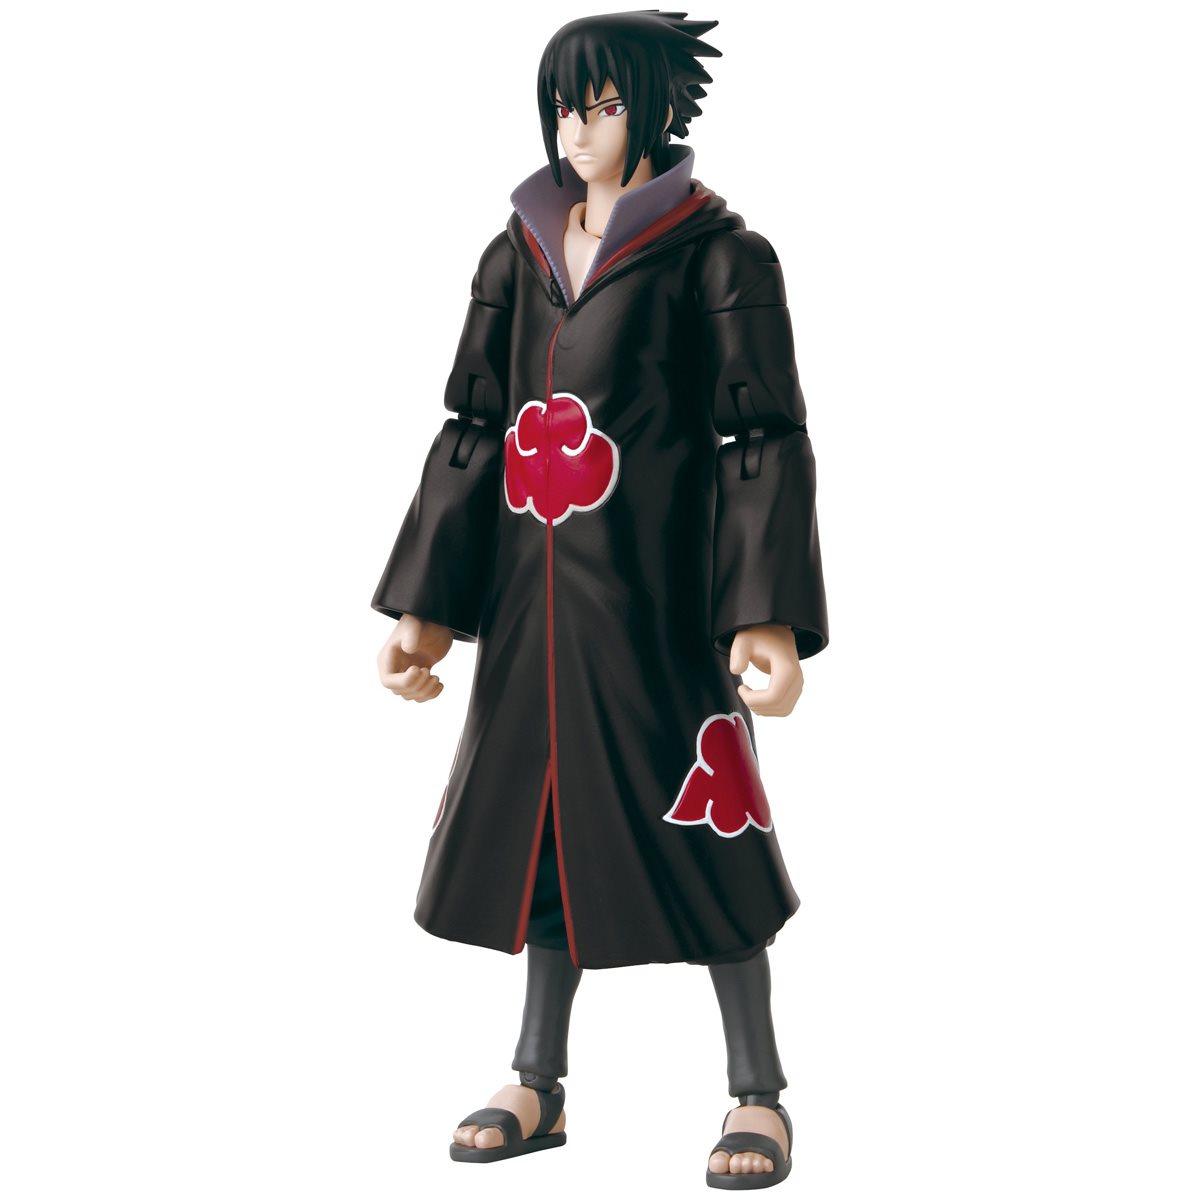 Bandai Namco Anime Heroes: Naruto - Sasuke taka Figura de Accion